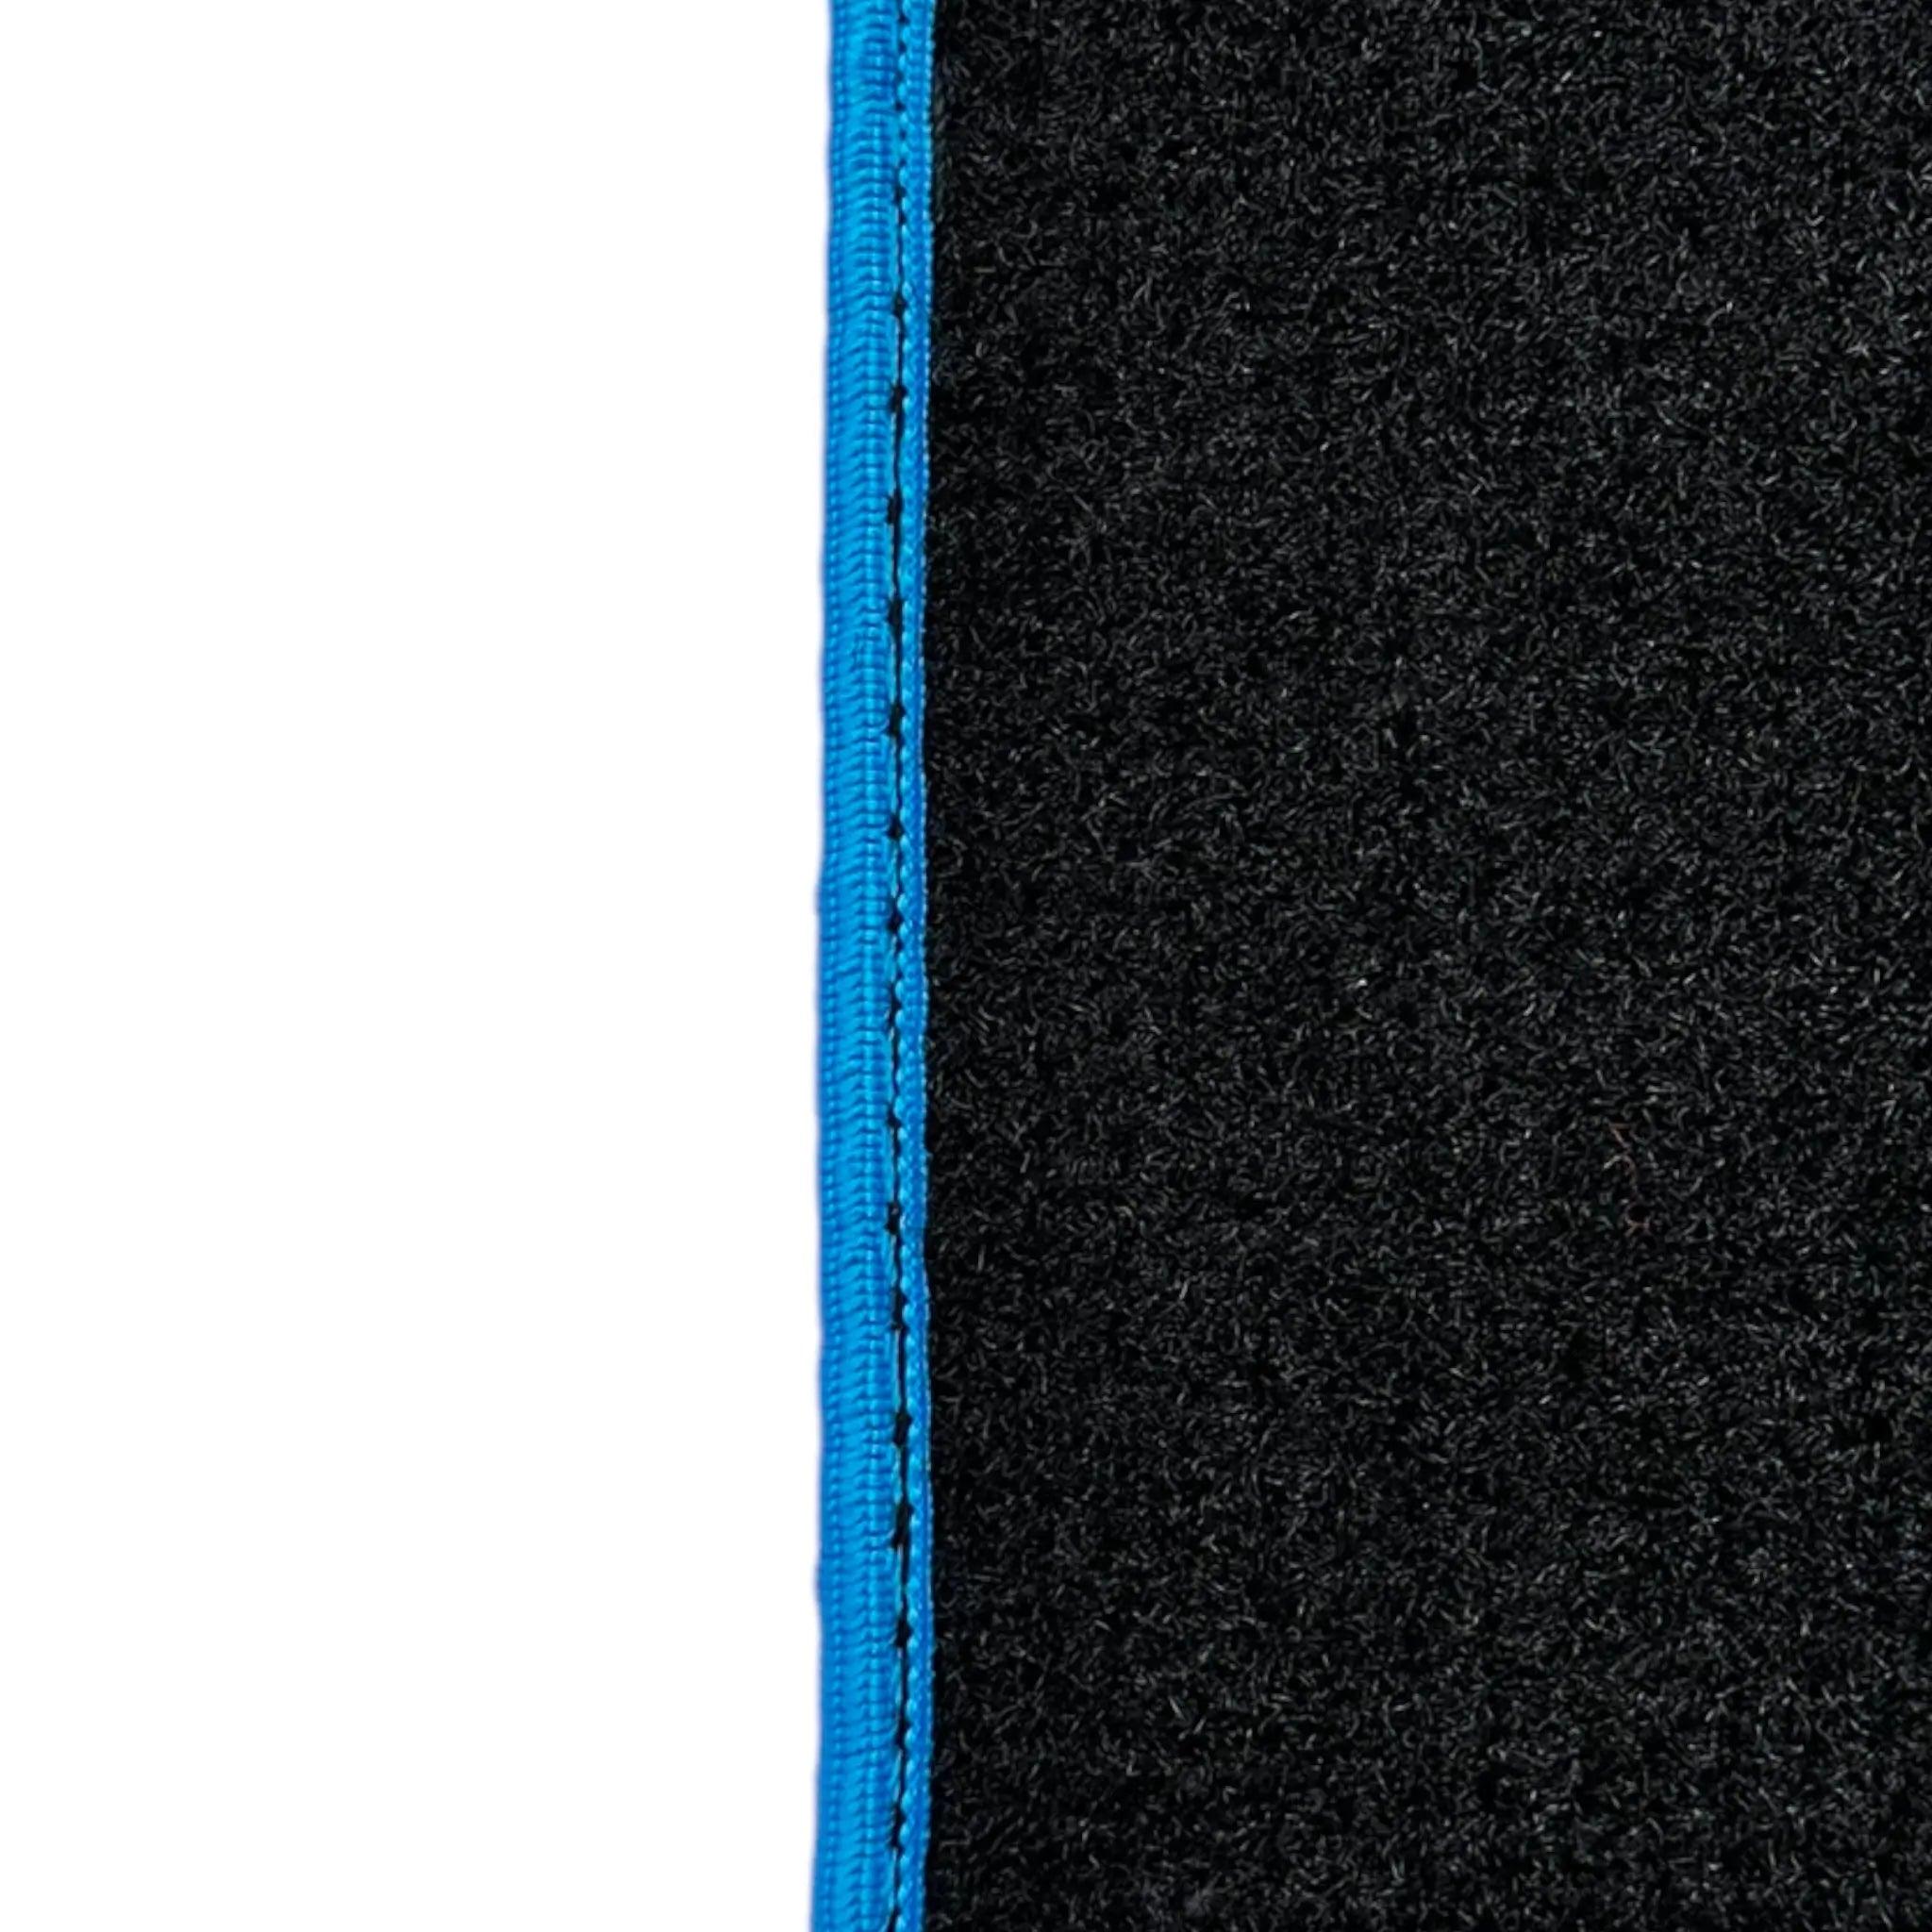 Black Leather Floor Mats For Lamborghini Aventador with Blue Trim